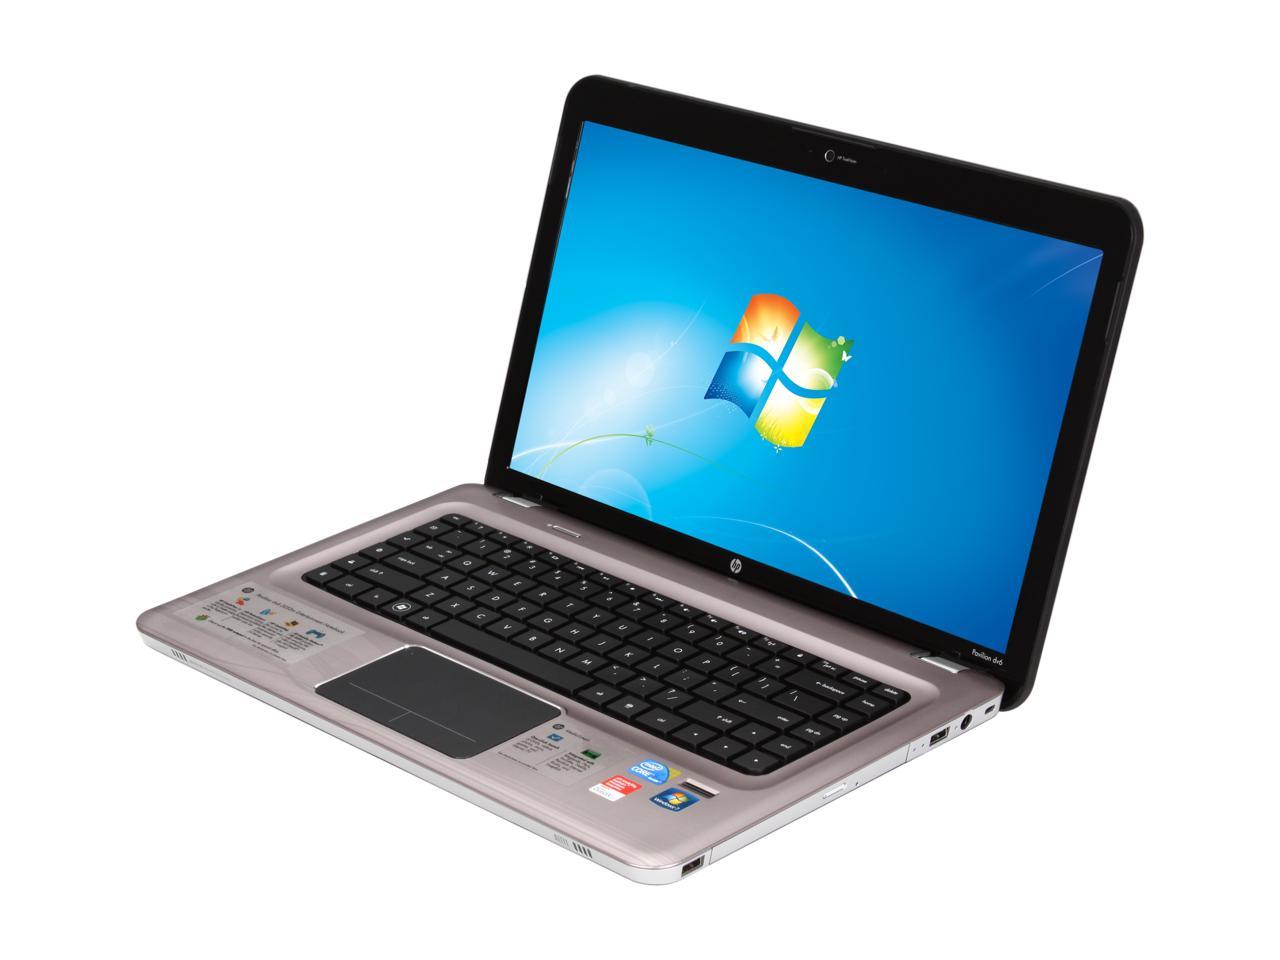 Hp Laptop Pavilion Dv6 3052nr Intel Core I7 1st Gen 7qm 1 60ghz 6gb Memory 500gb Hdd Ati Mobility Radeon Hd 5650 15 6 Windows 7 Home Premium 64 Bit Newegg Com